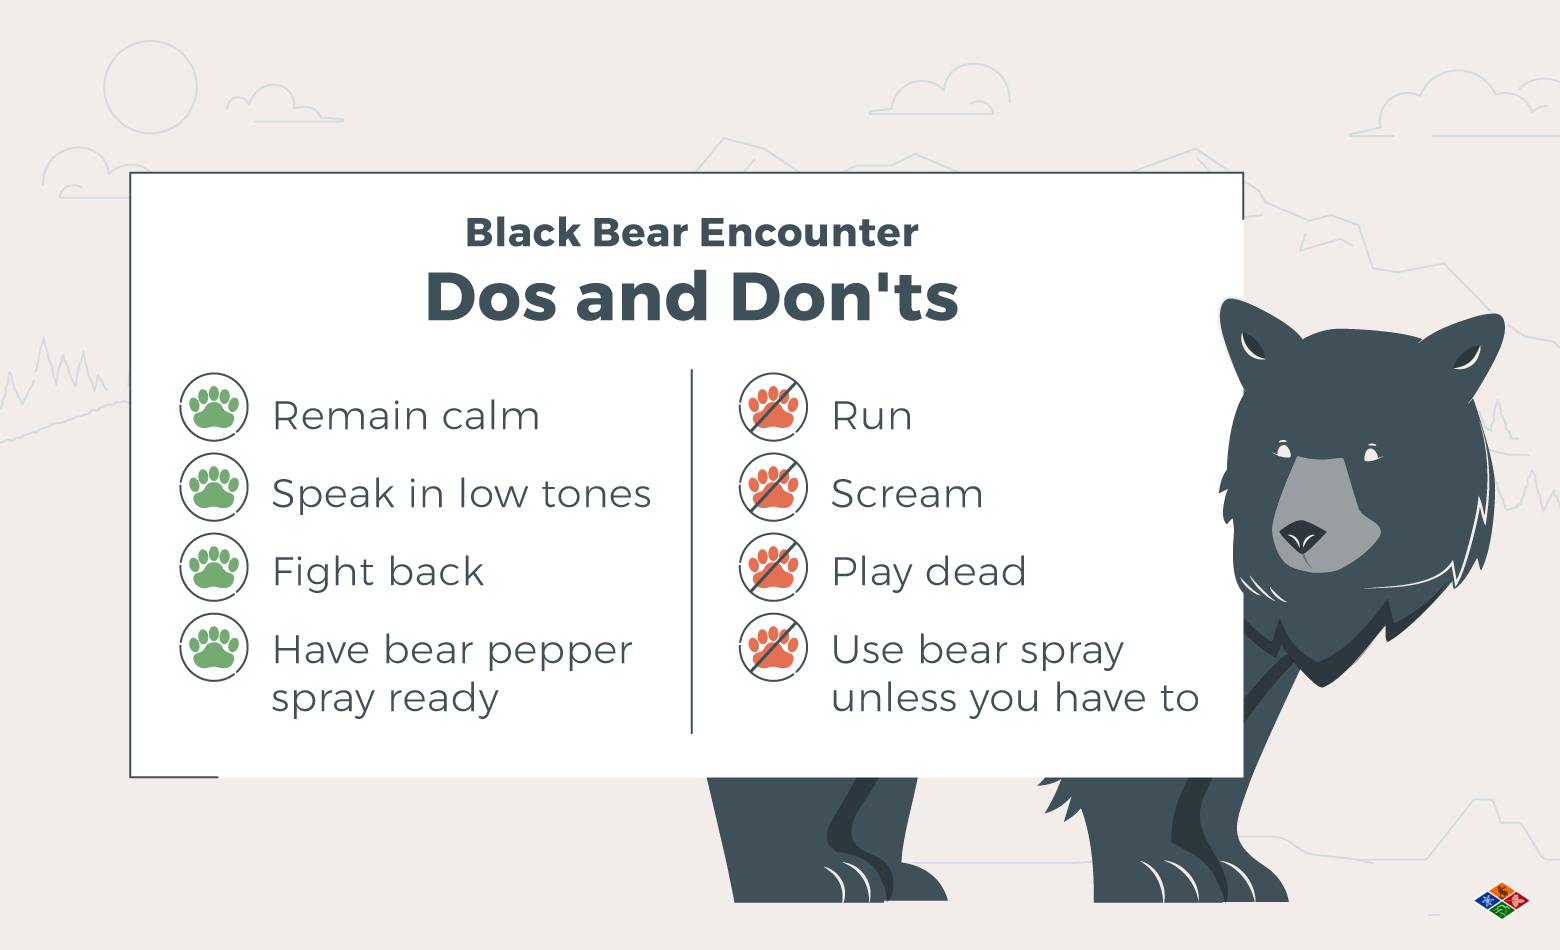 Bear encounter dos and don'ts.